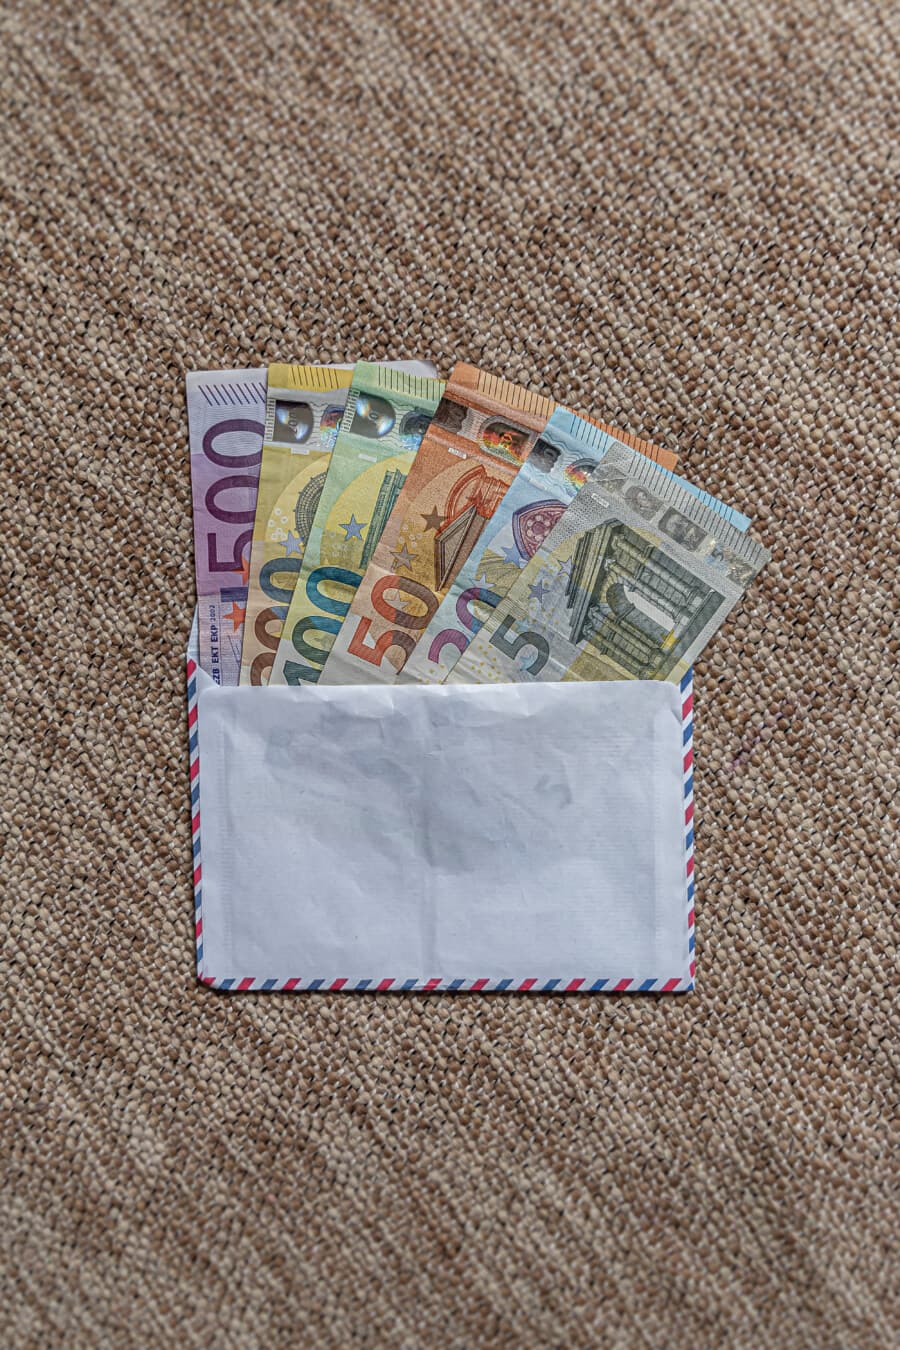 kuvert, Europa union, pengeseddel, euro, papirpenge, besparelser, indkomst, penge, valuta, kontant